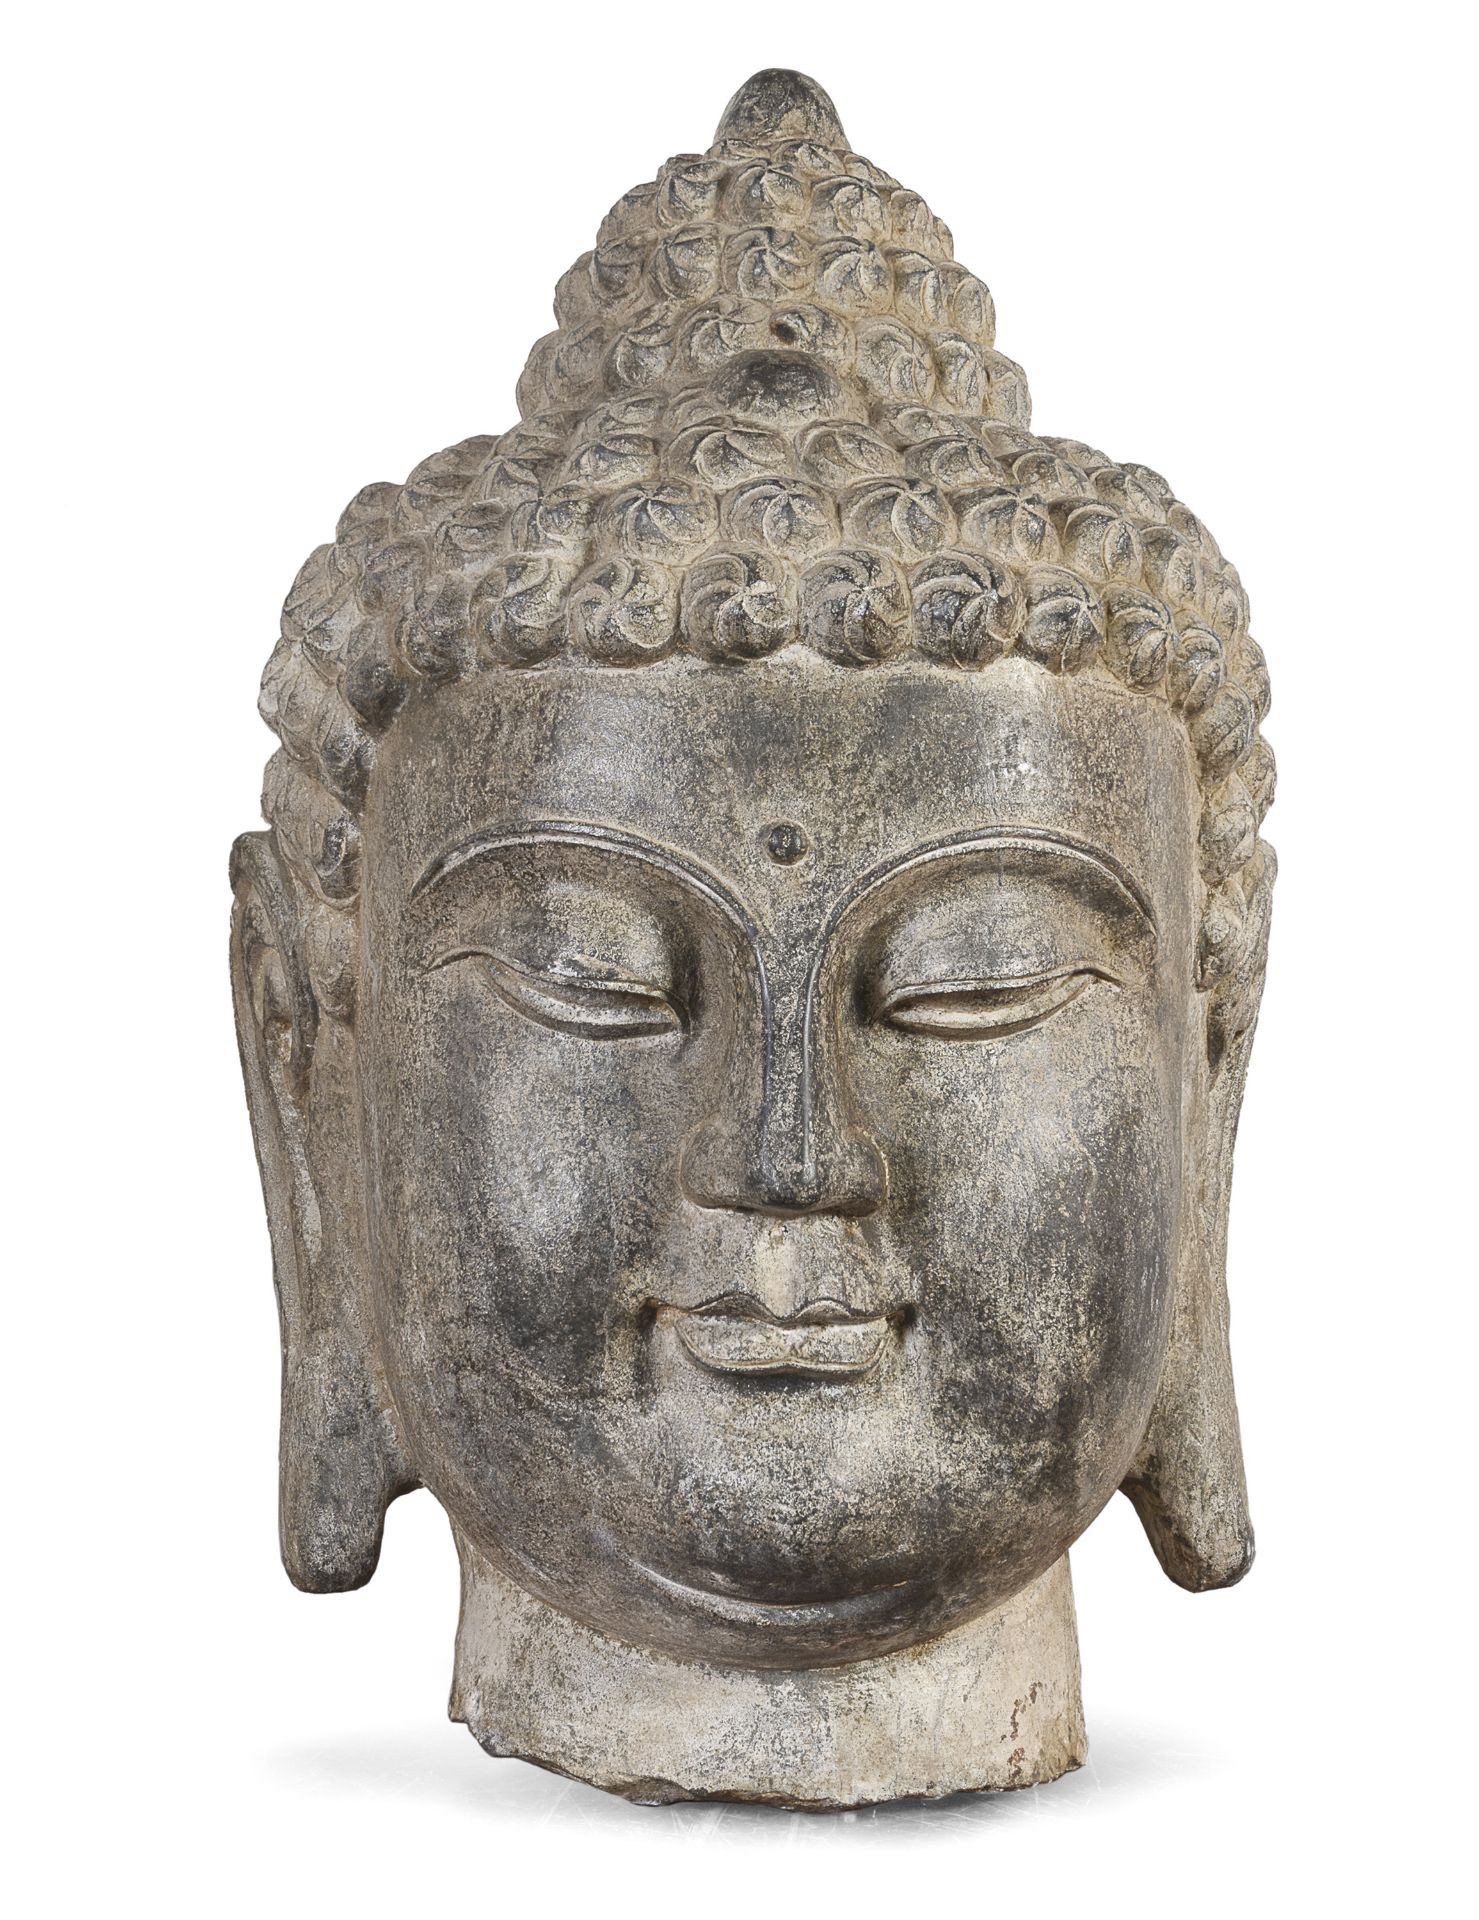 A BIG STONE HEAD OF BUDDHA CHINA 20TH CENTURY